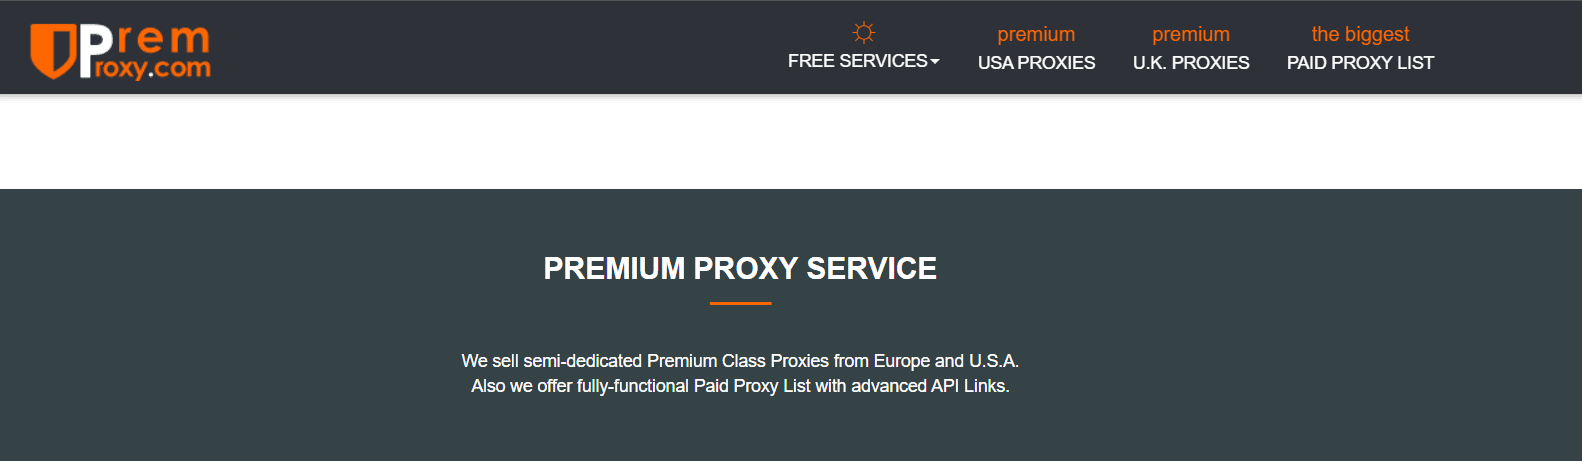 prem proxy